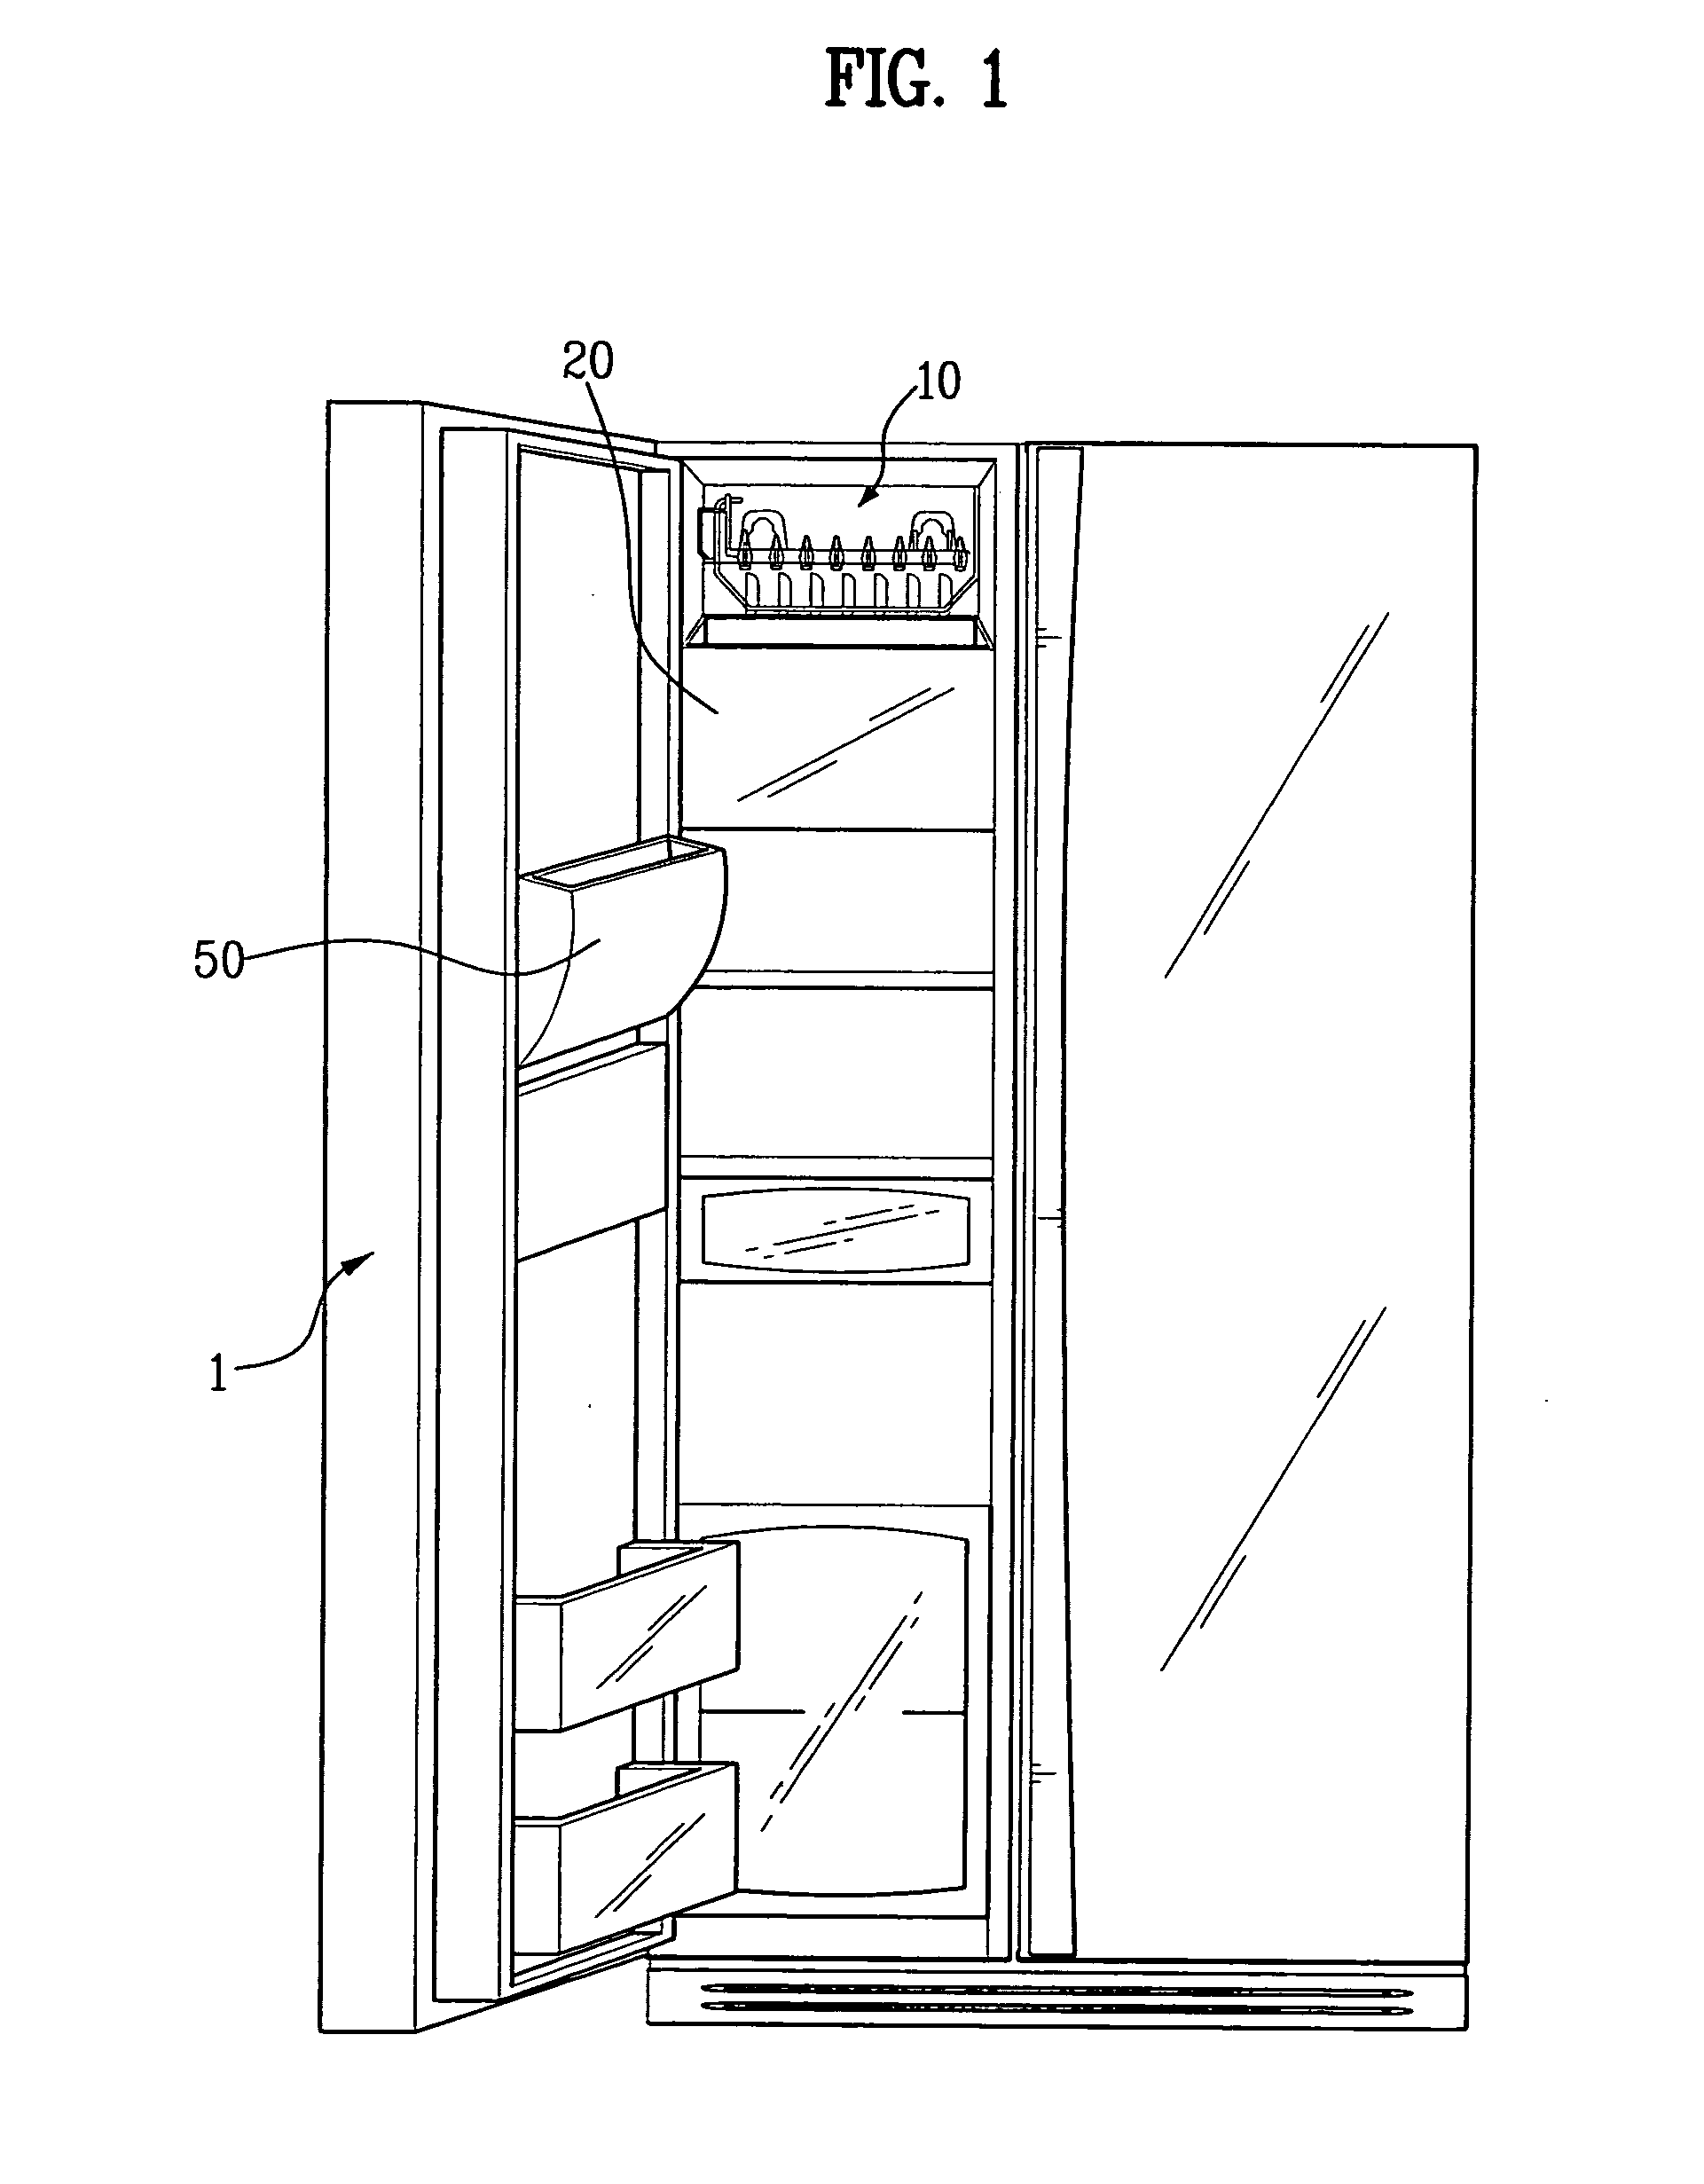 Ice supply system of refrigerator